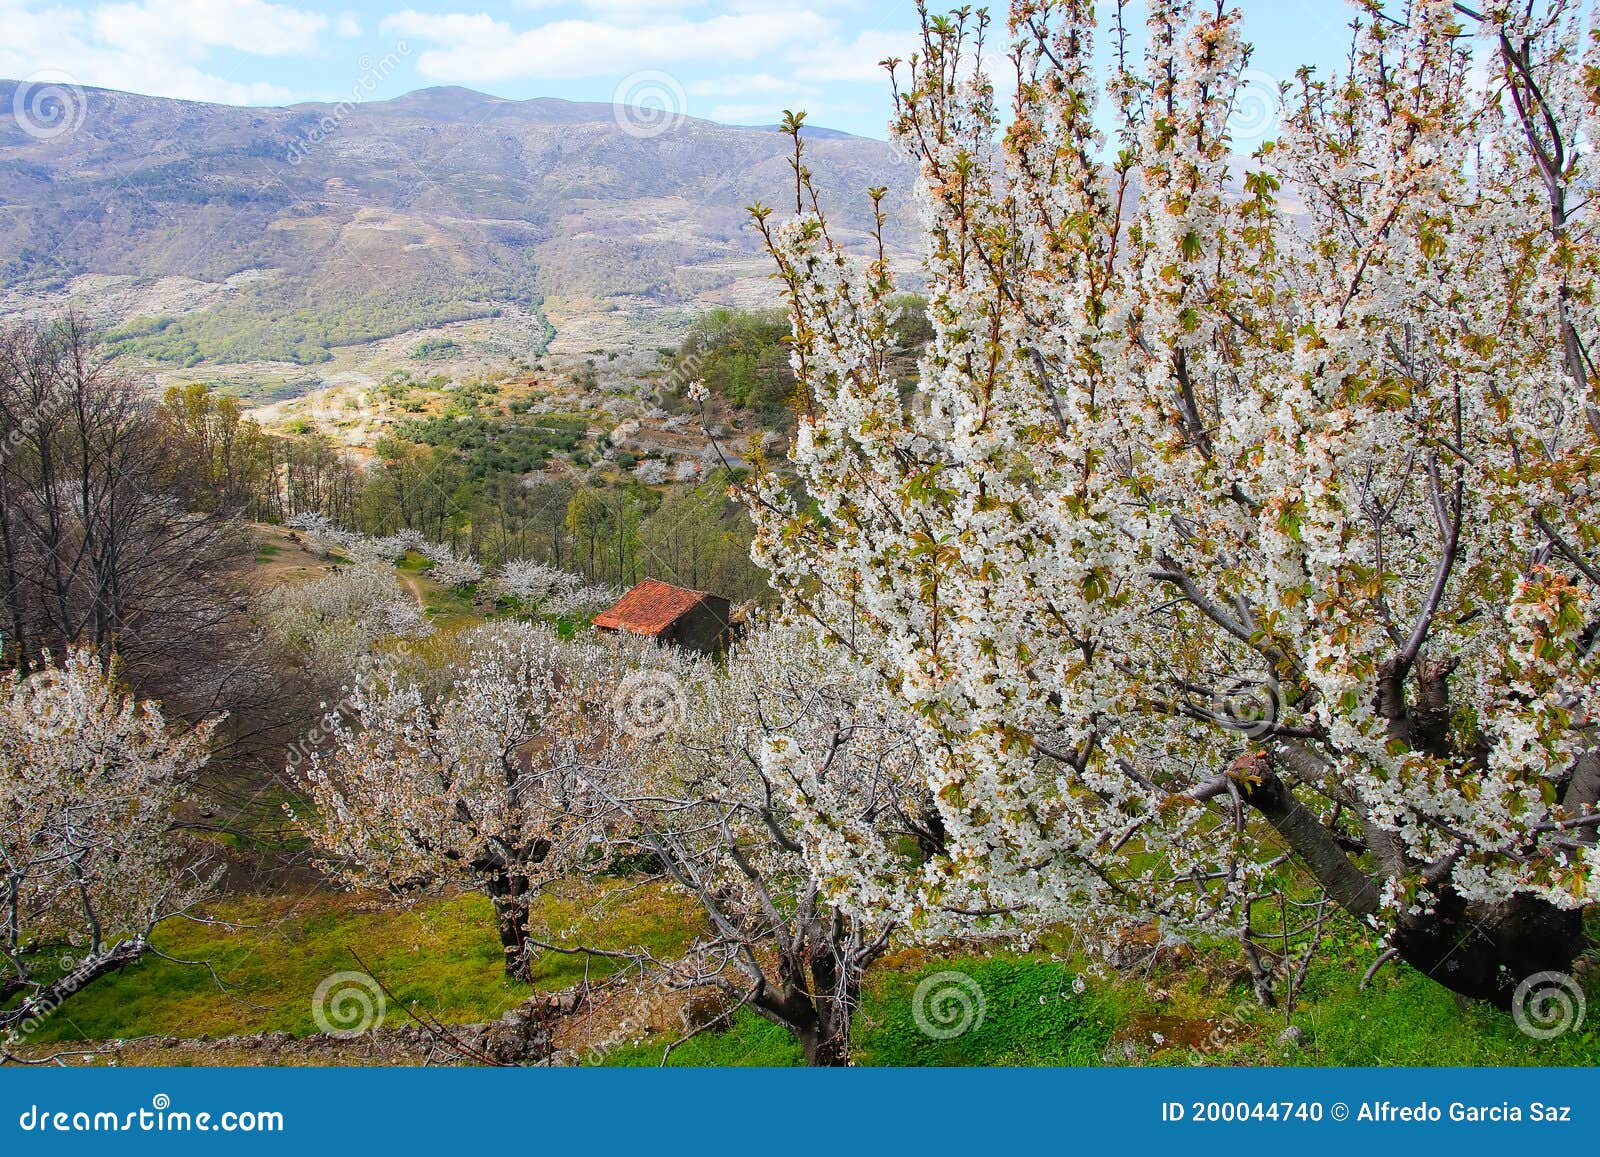 cherry blossom at jerte valley, cerezos en flor valle del jerte. cherry blossom flowers are in bloom